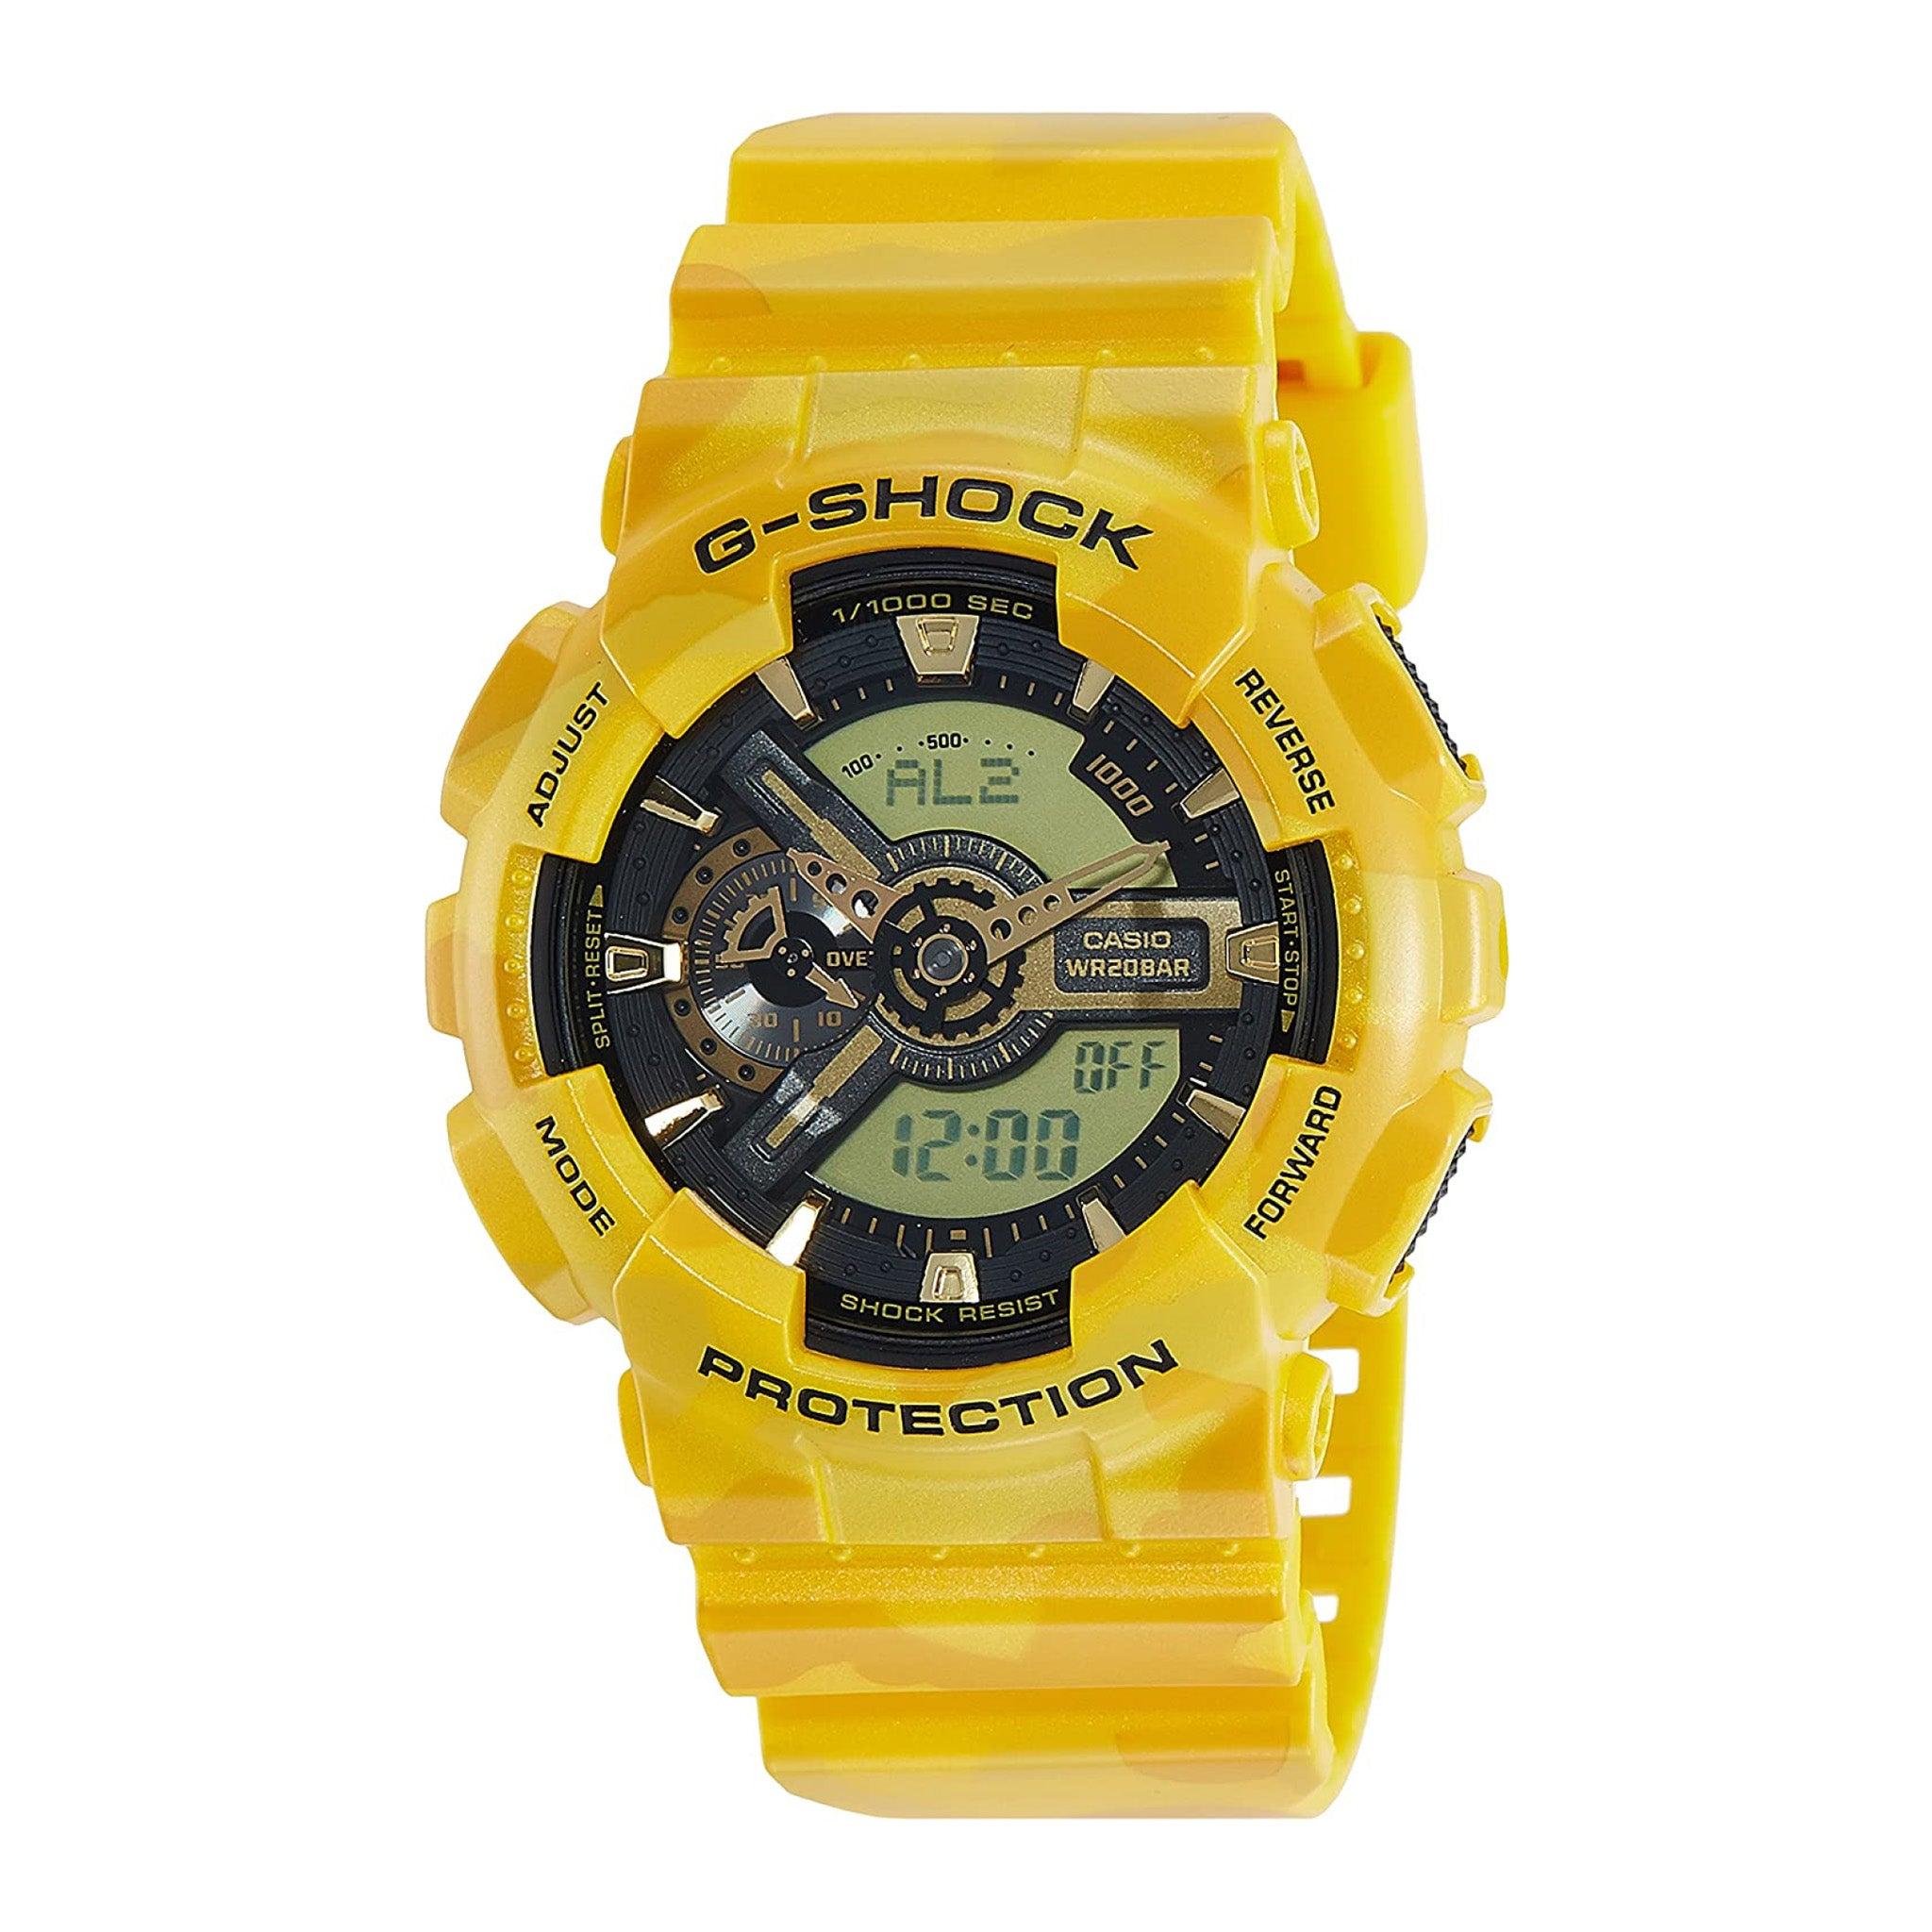 ساعات كاسيو جي شوك رجالية 5.5 سم رقمية أصفر أنالوغ Casio G-Shock Men's Black Ana-Digi Dial Resin Band Watch - Ga-110cm-9a